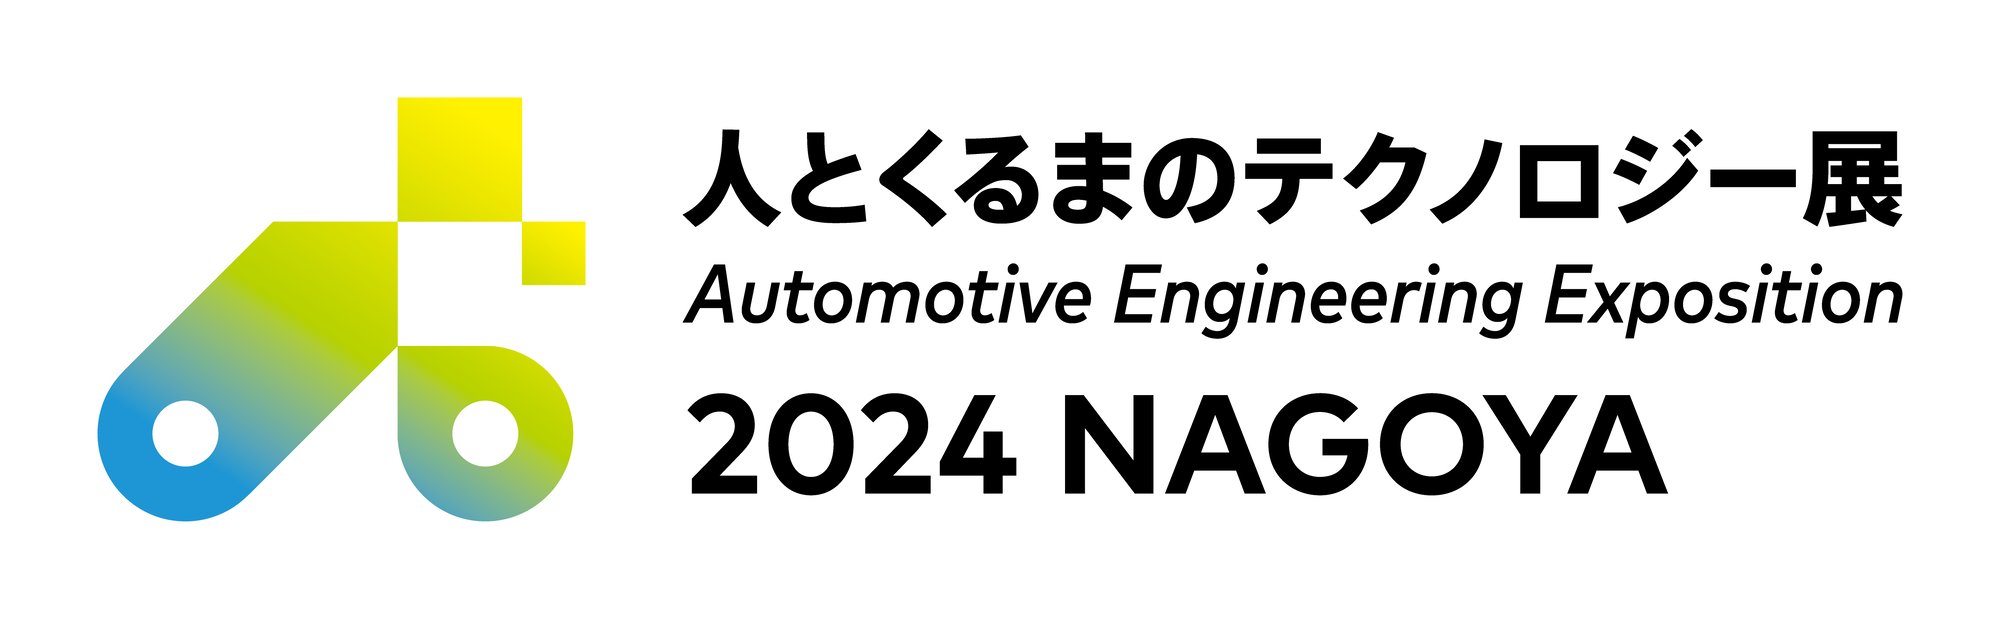 logo_AEE_横組2024NAGOYA_B